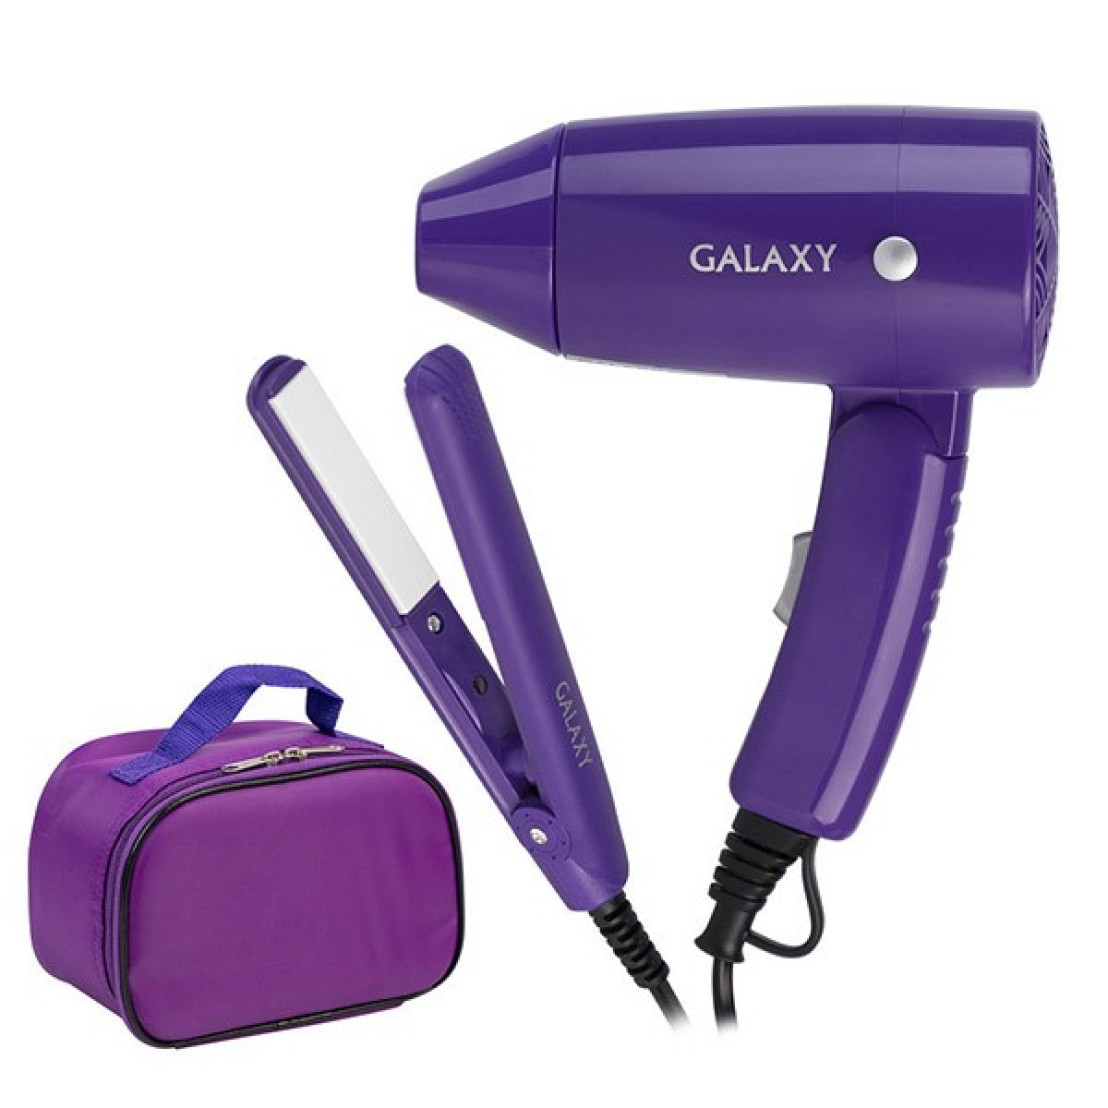 Аппараты для волос купить. Фен Galaxy gl 4720. Фен Galaxy line gl 4305 (1400 Вт,2 скорости,складн.ручка). Фен для волос Galaxy gl4310. Щипцы Galaxy gl 4501.